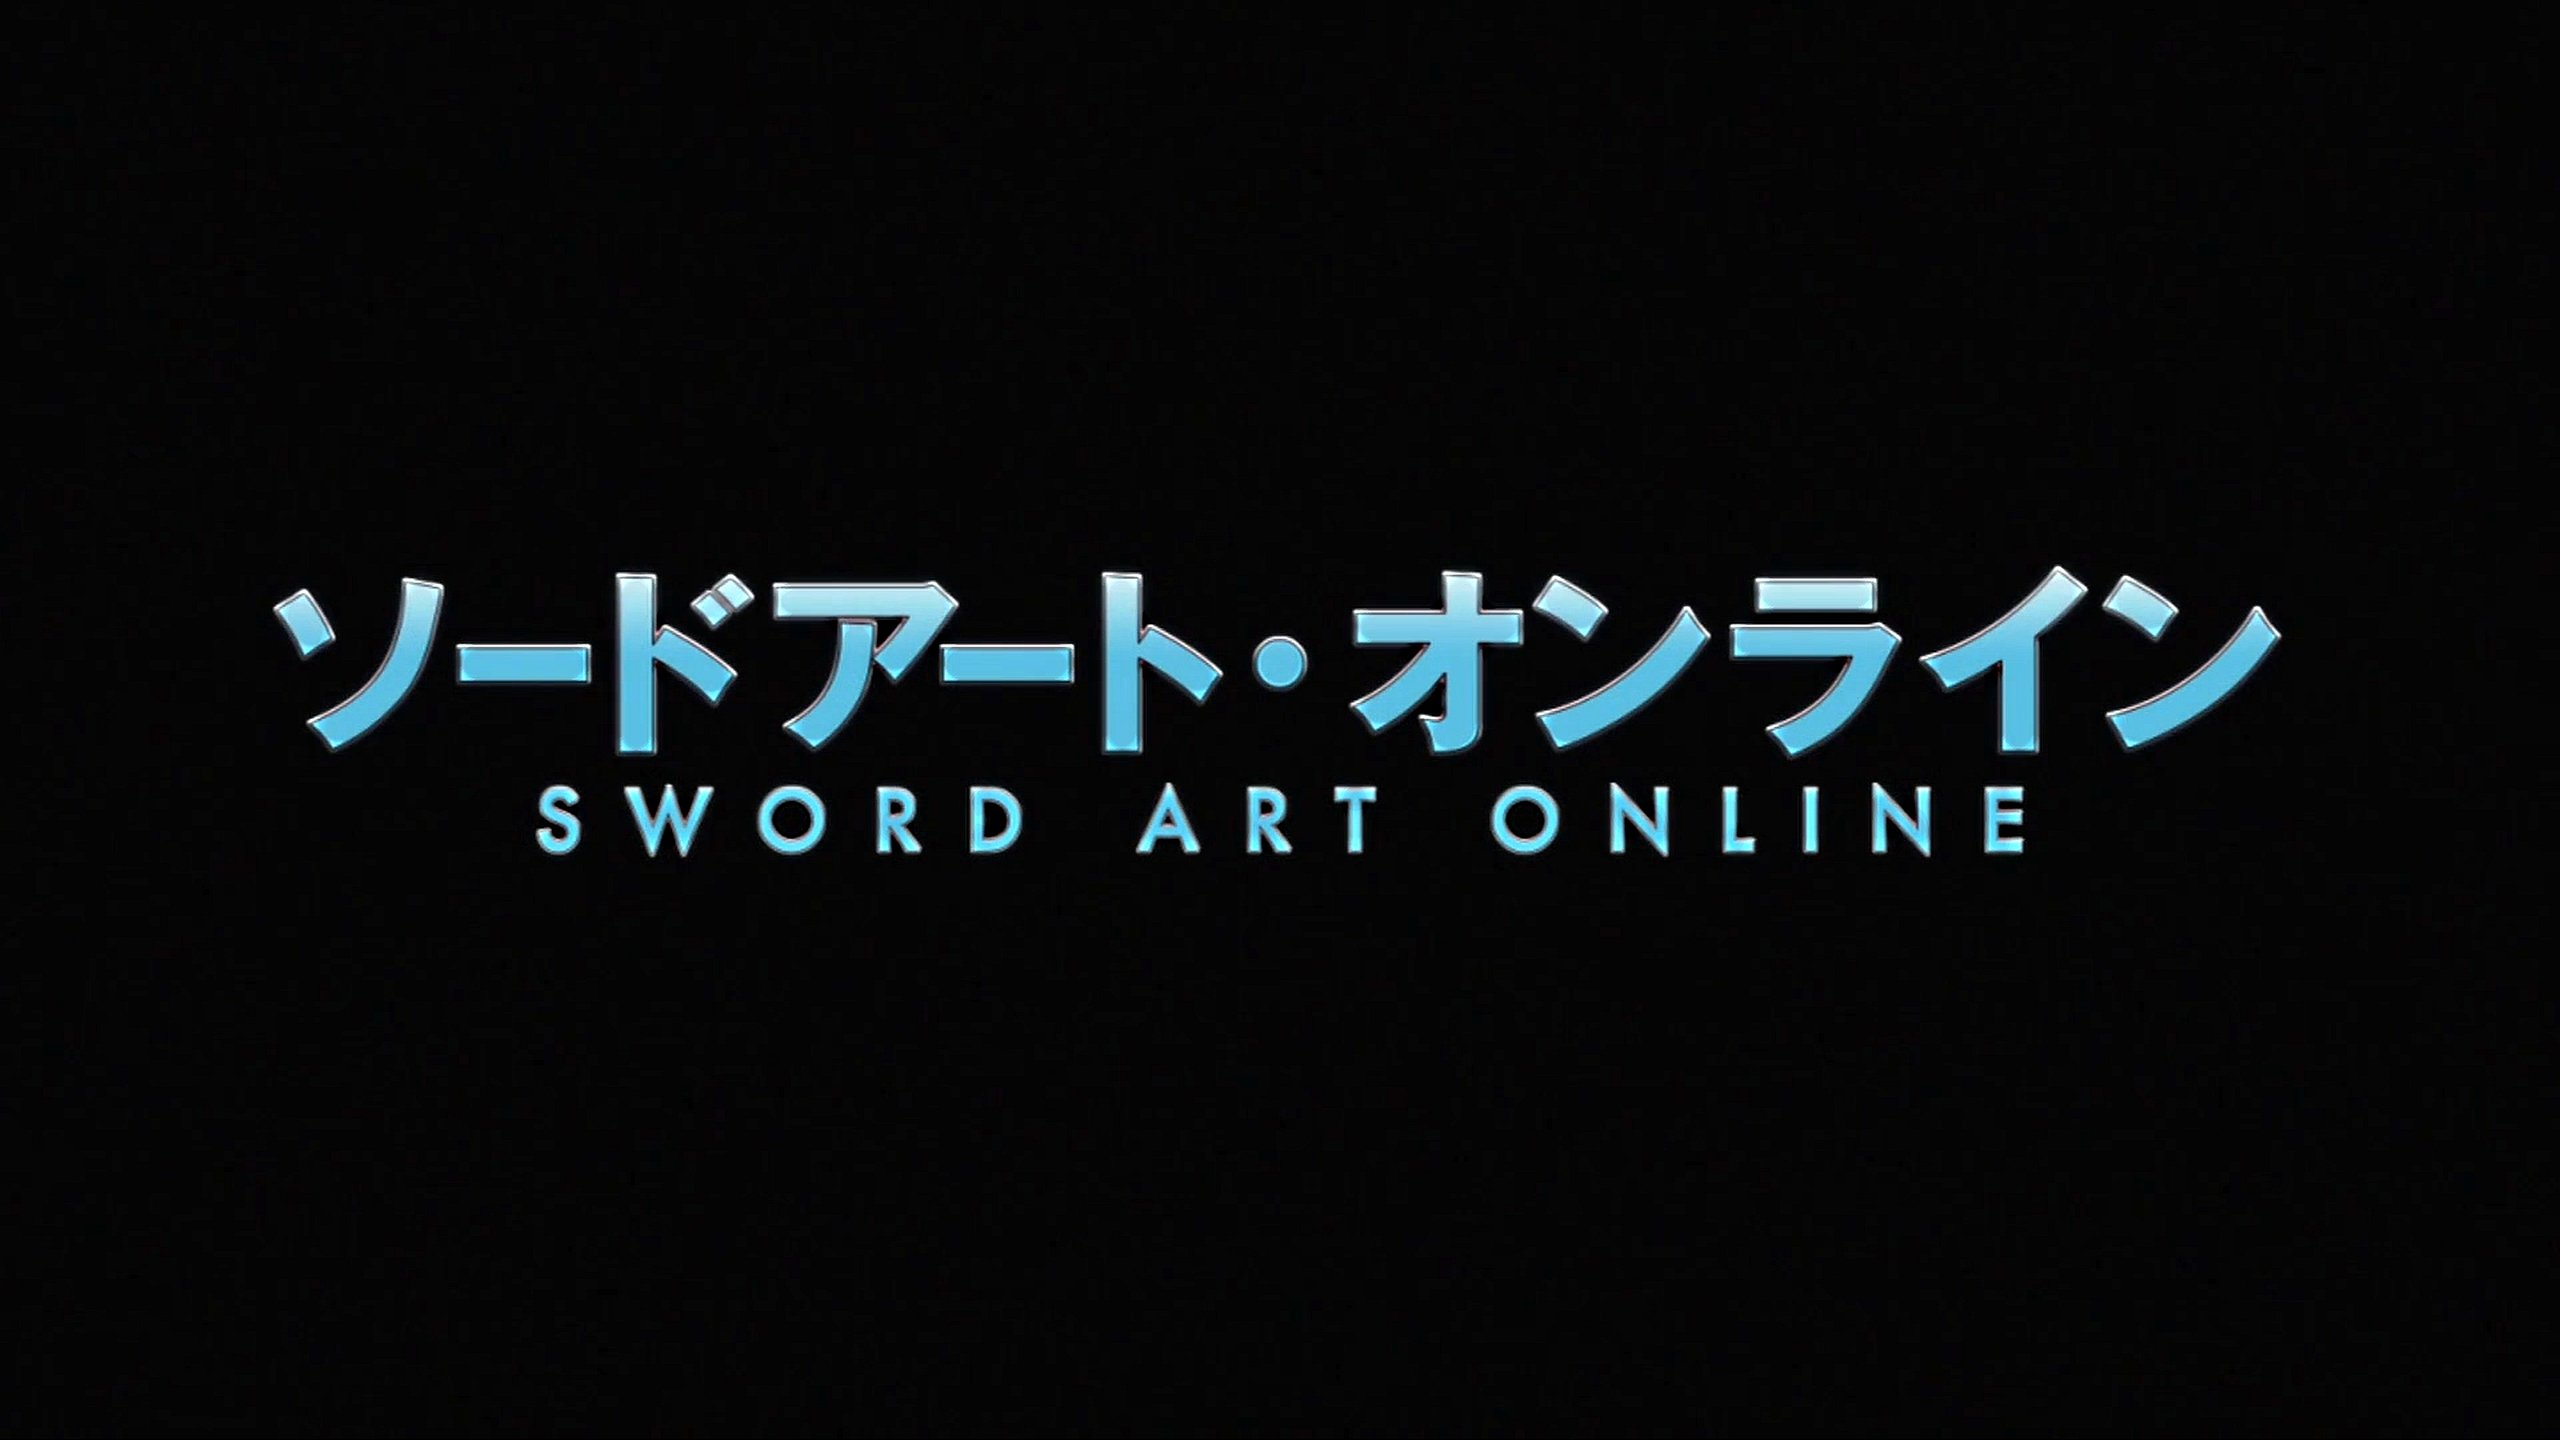 High resolution Sword Art Online (SAO) hd 2560x1440 background ID:180707 for desktop